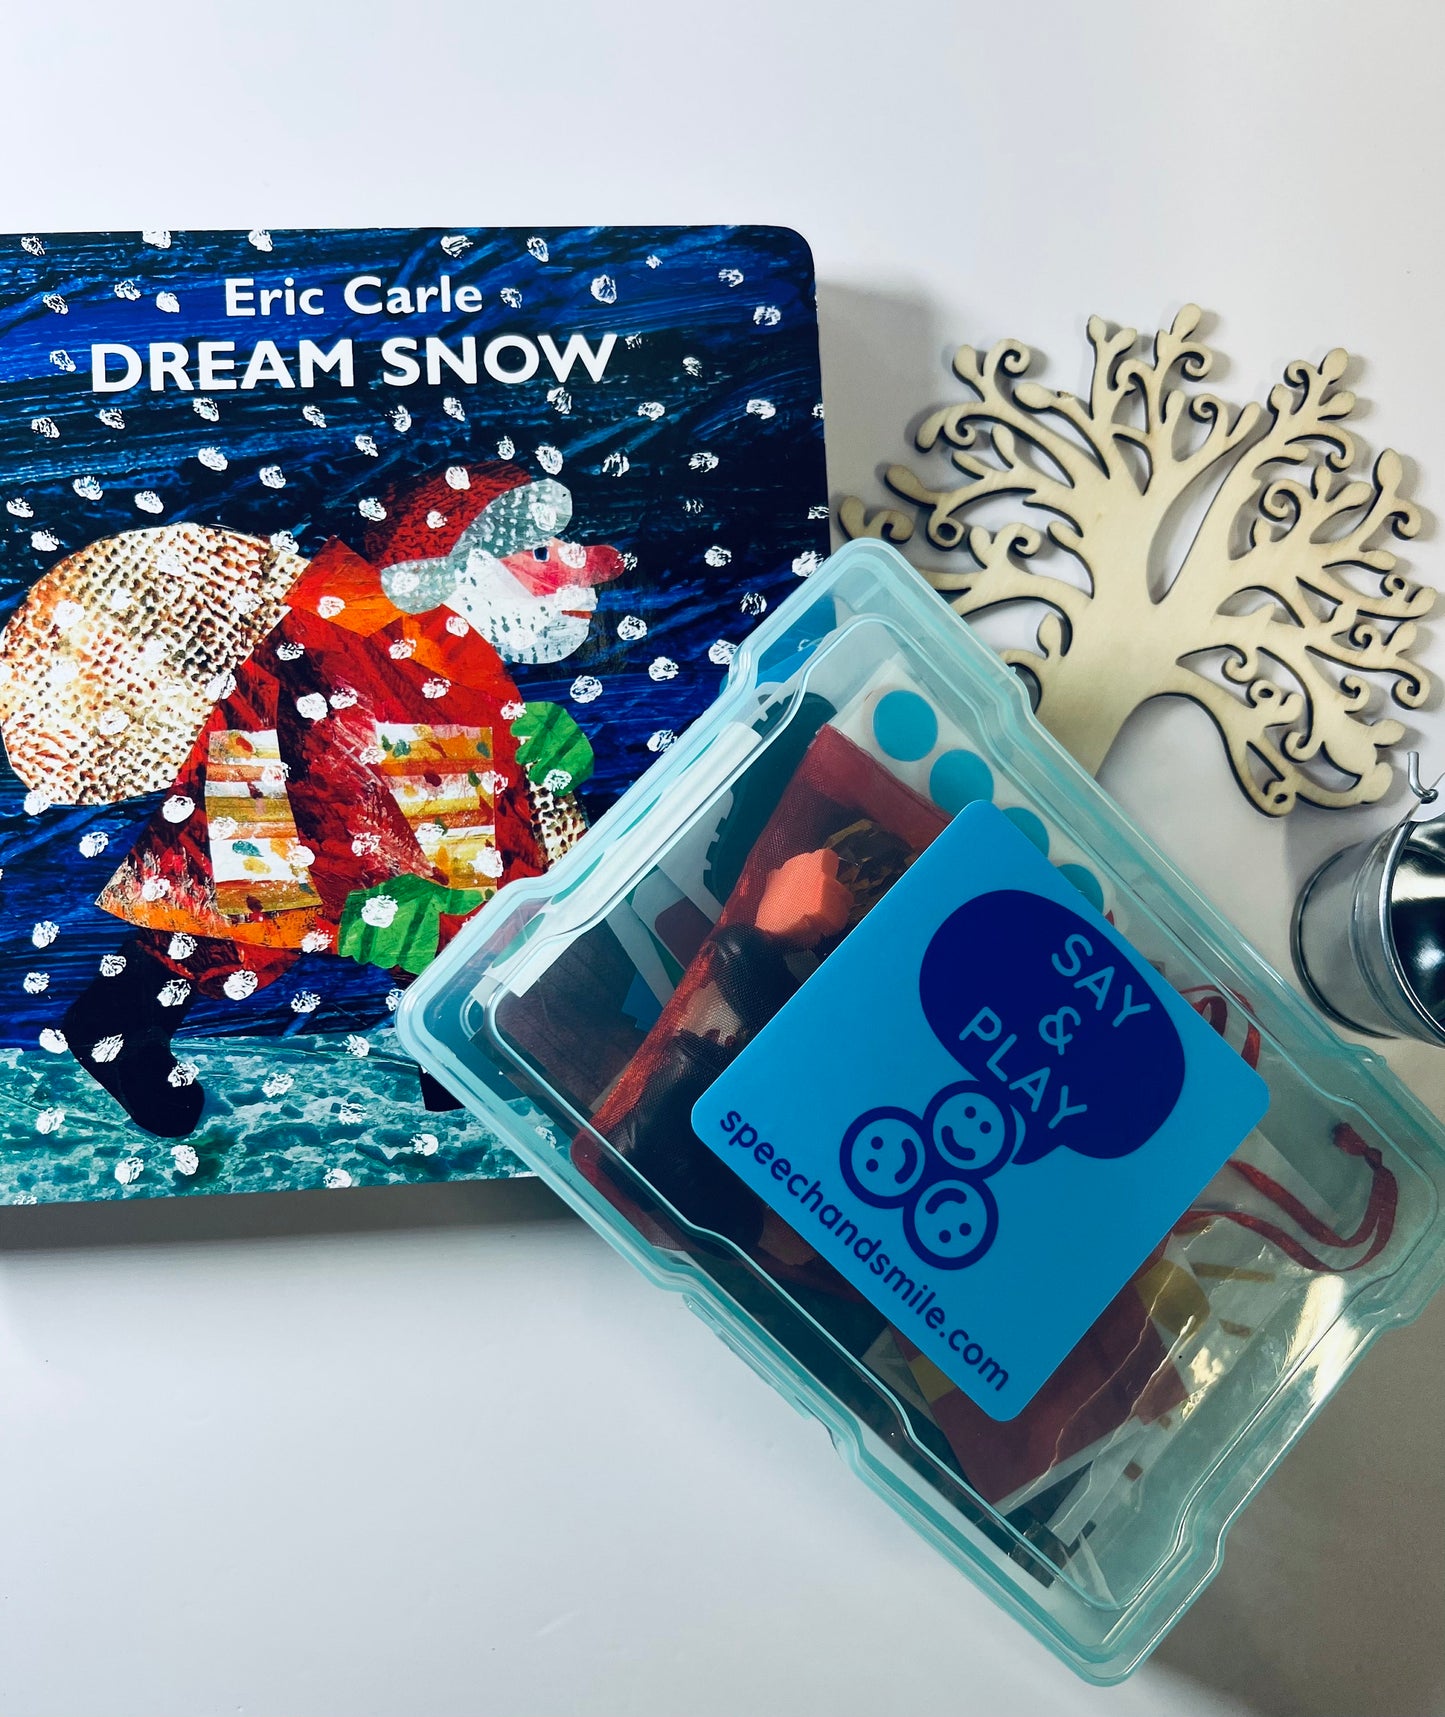 DREAM SNOW Story Kit-Objetos acompañantes de historia Dream Snow Eric Carle-Regalo para niños-Terapia del habla Mini objetos para libro-